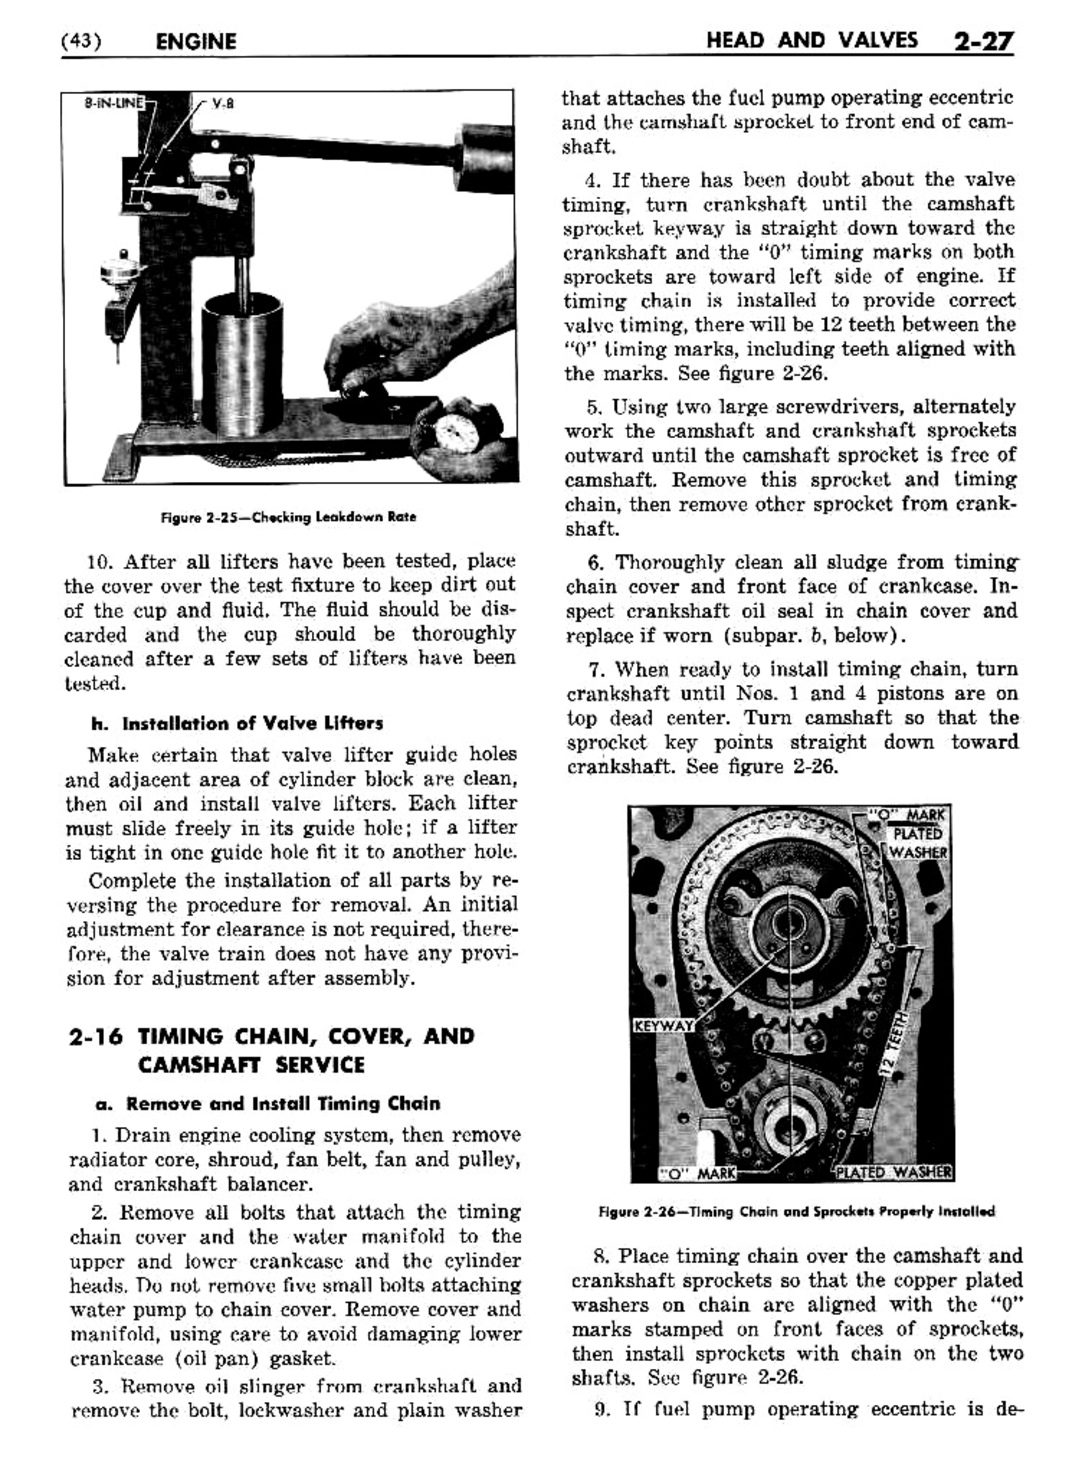 n_03 1954 Buick Shop Manual - Engine-027-027.jpg